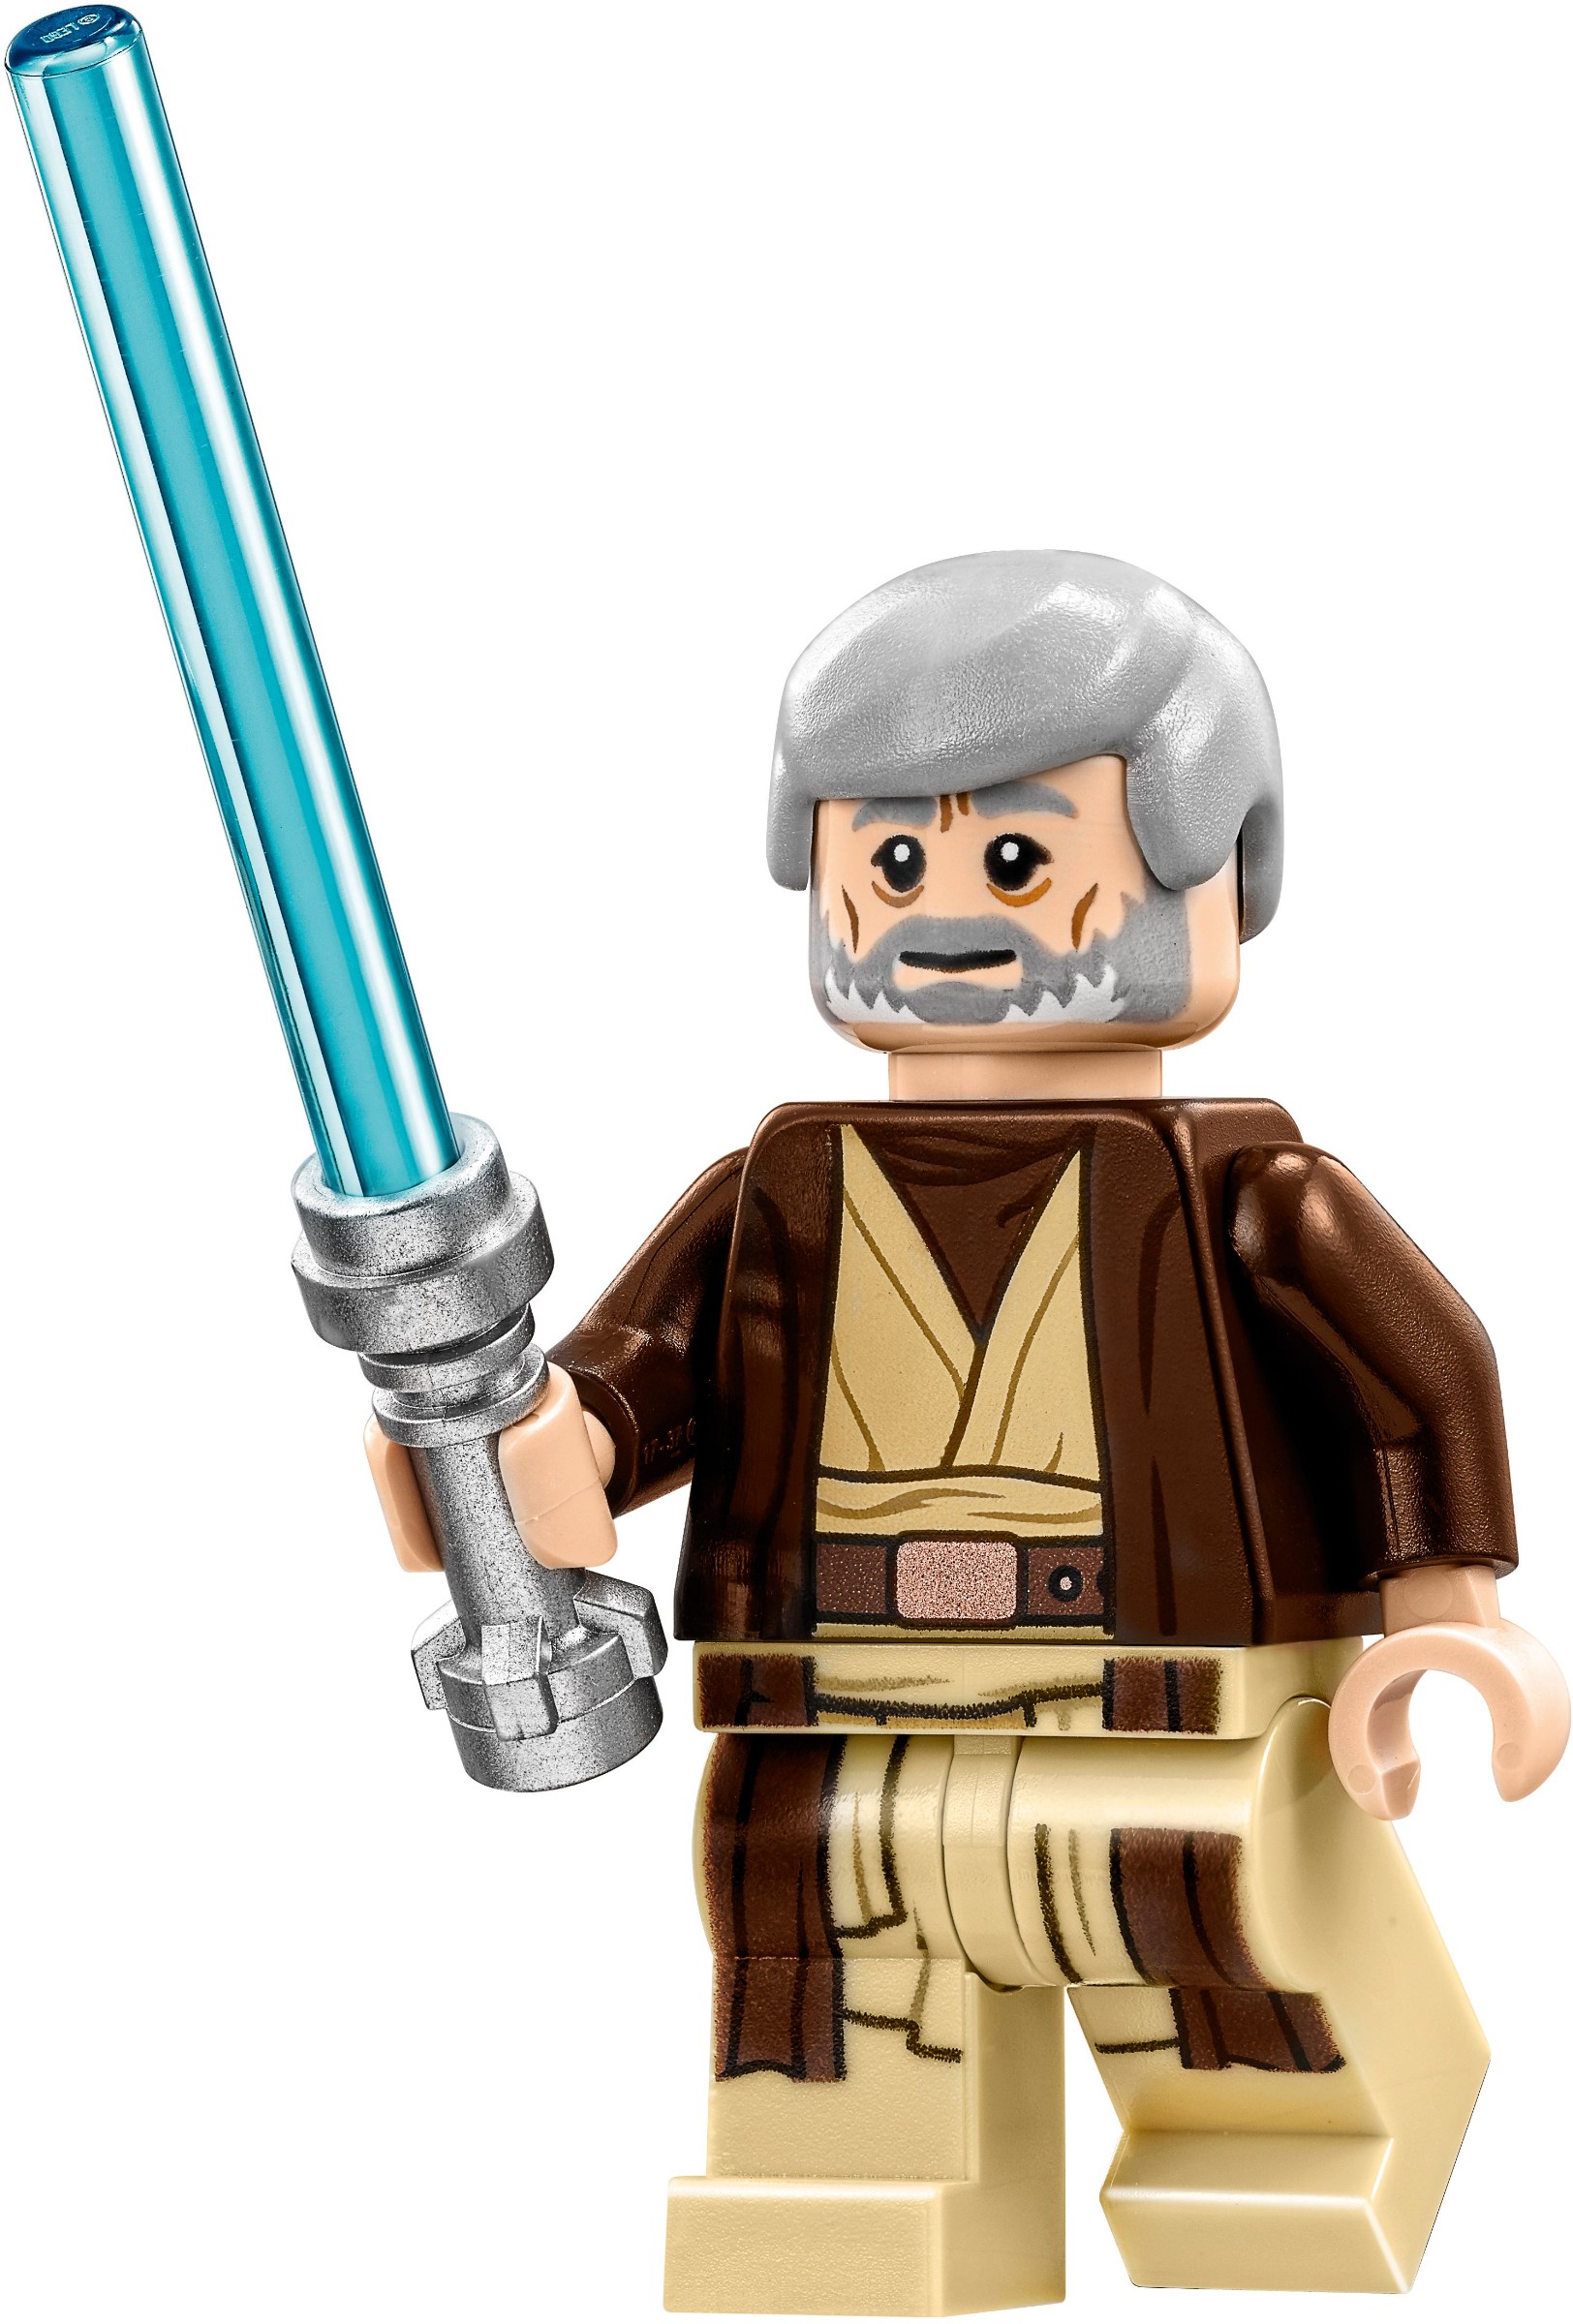 LEGO Star Wars Death Star Minifigure 75159 Luke Skywalker with Lightsaber Mouth Closed 